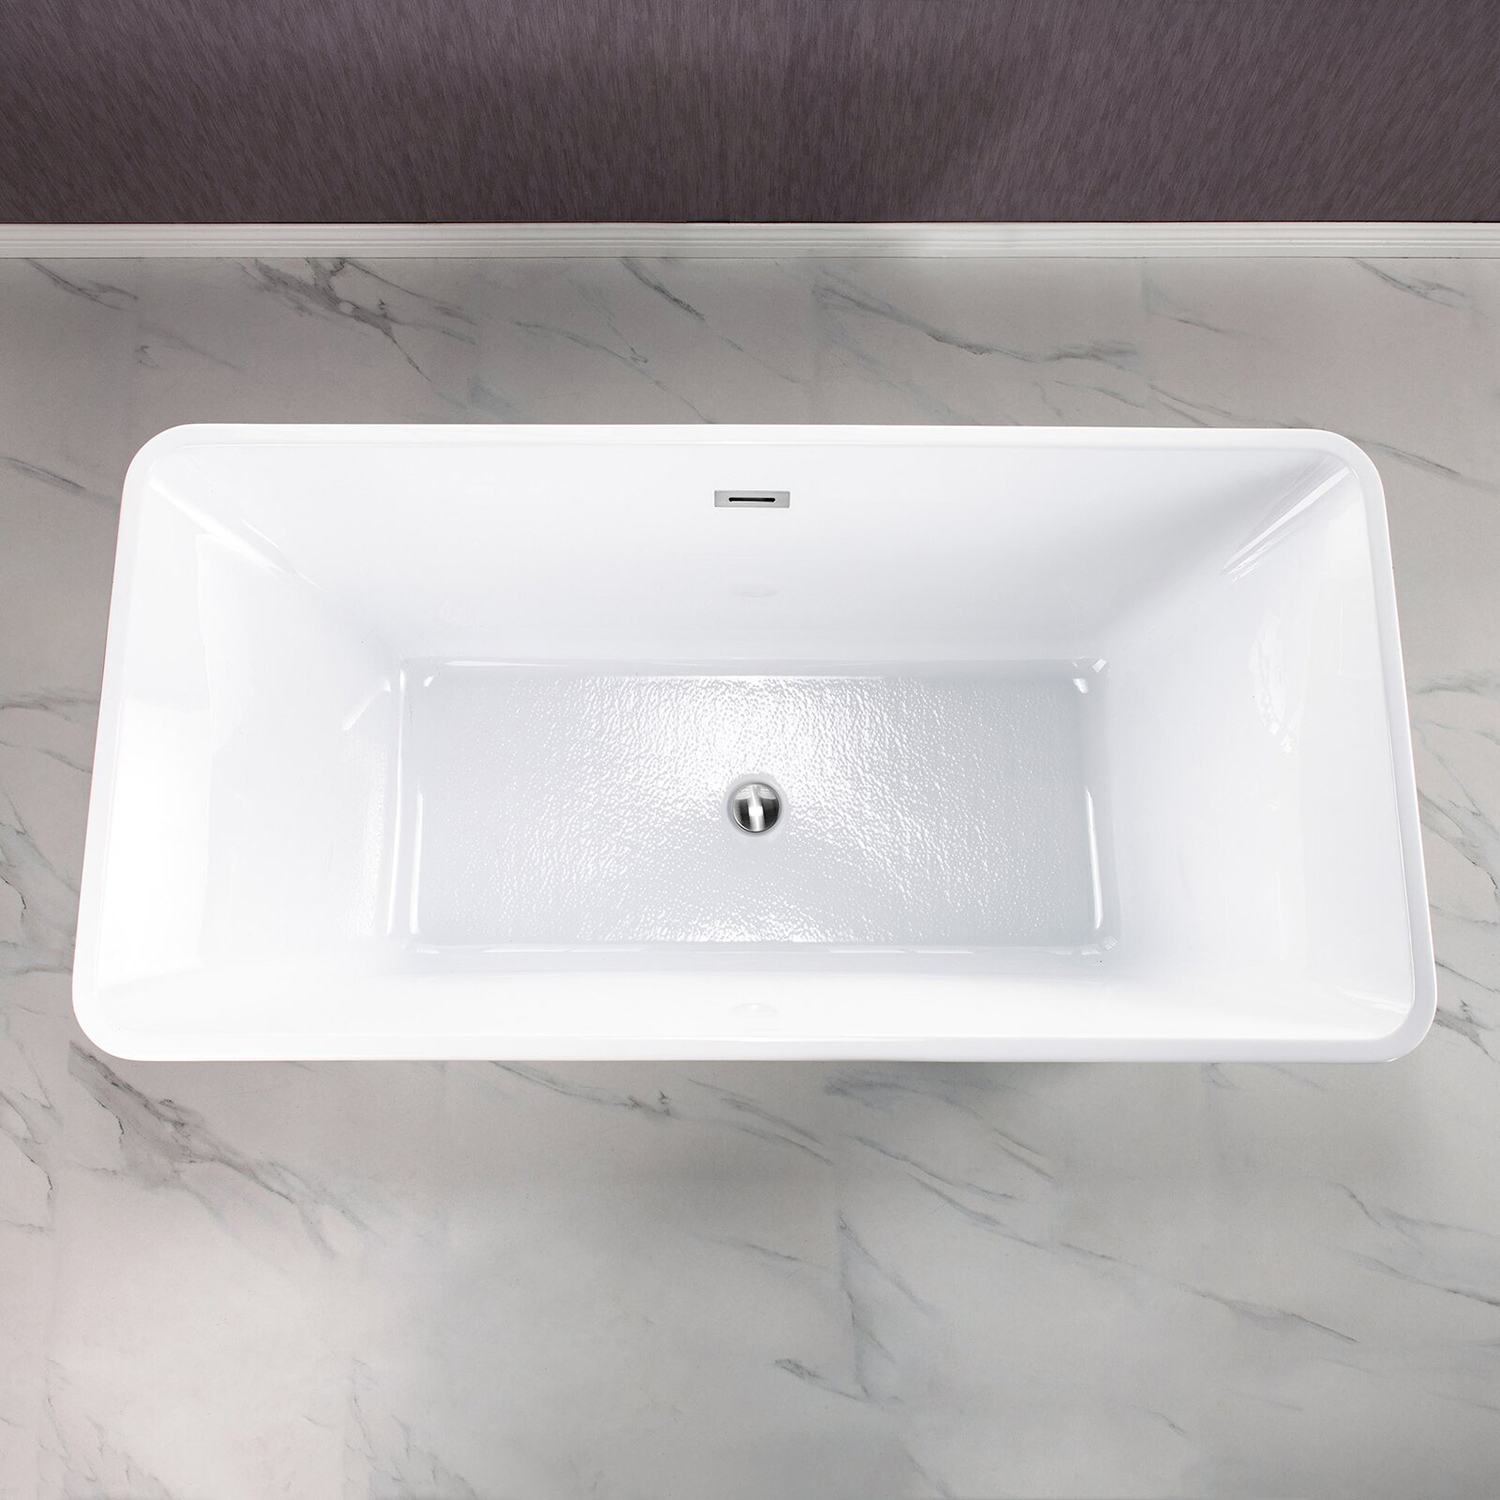 Modern Acrylic Freestanding Rectangle Tub 67 inch Flat Bottom One piece Stand Alone Fiberglass Soaking Hot Tub